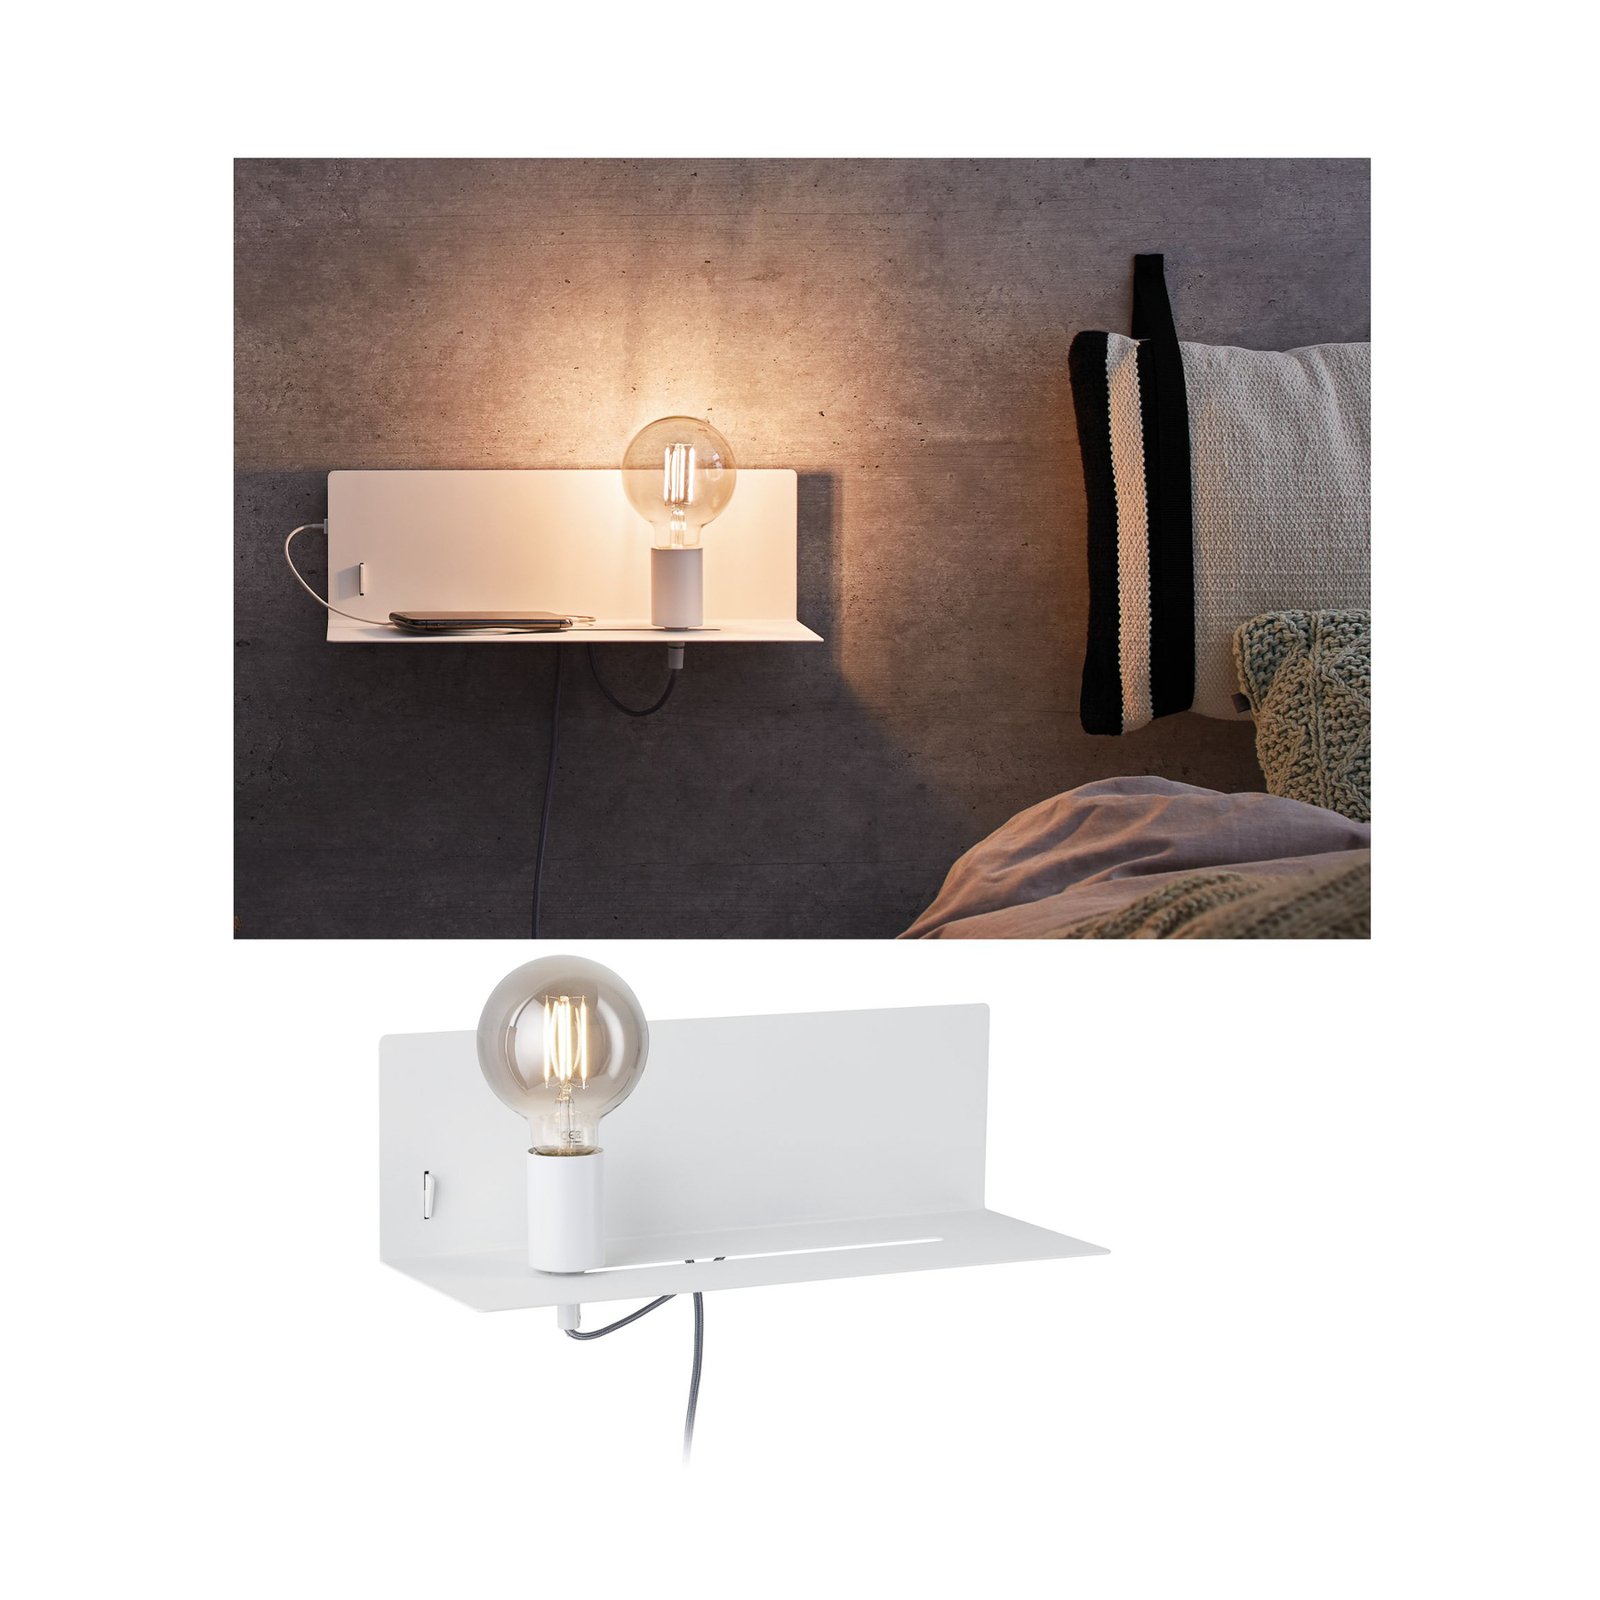 Paulmann Devara wall light with a shelf, white